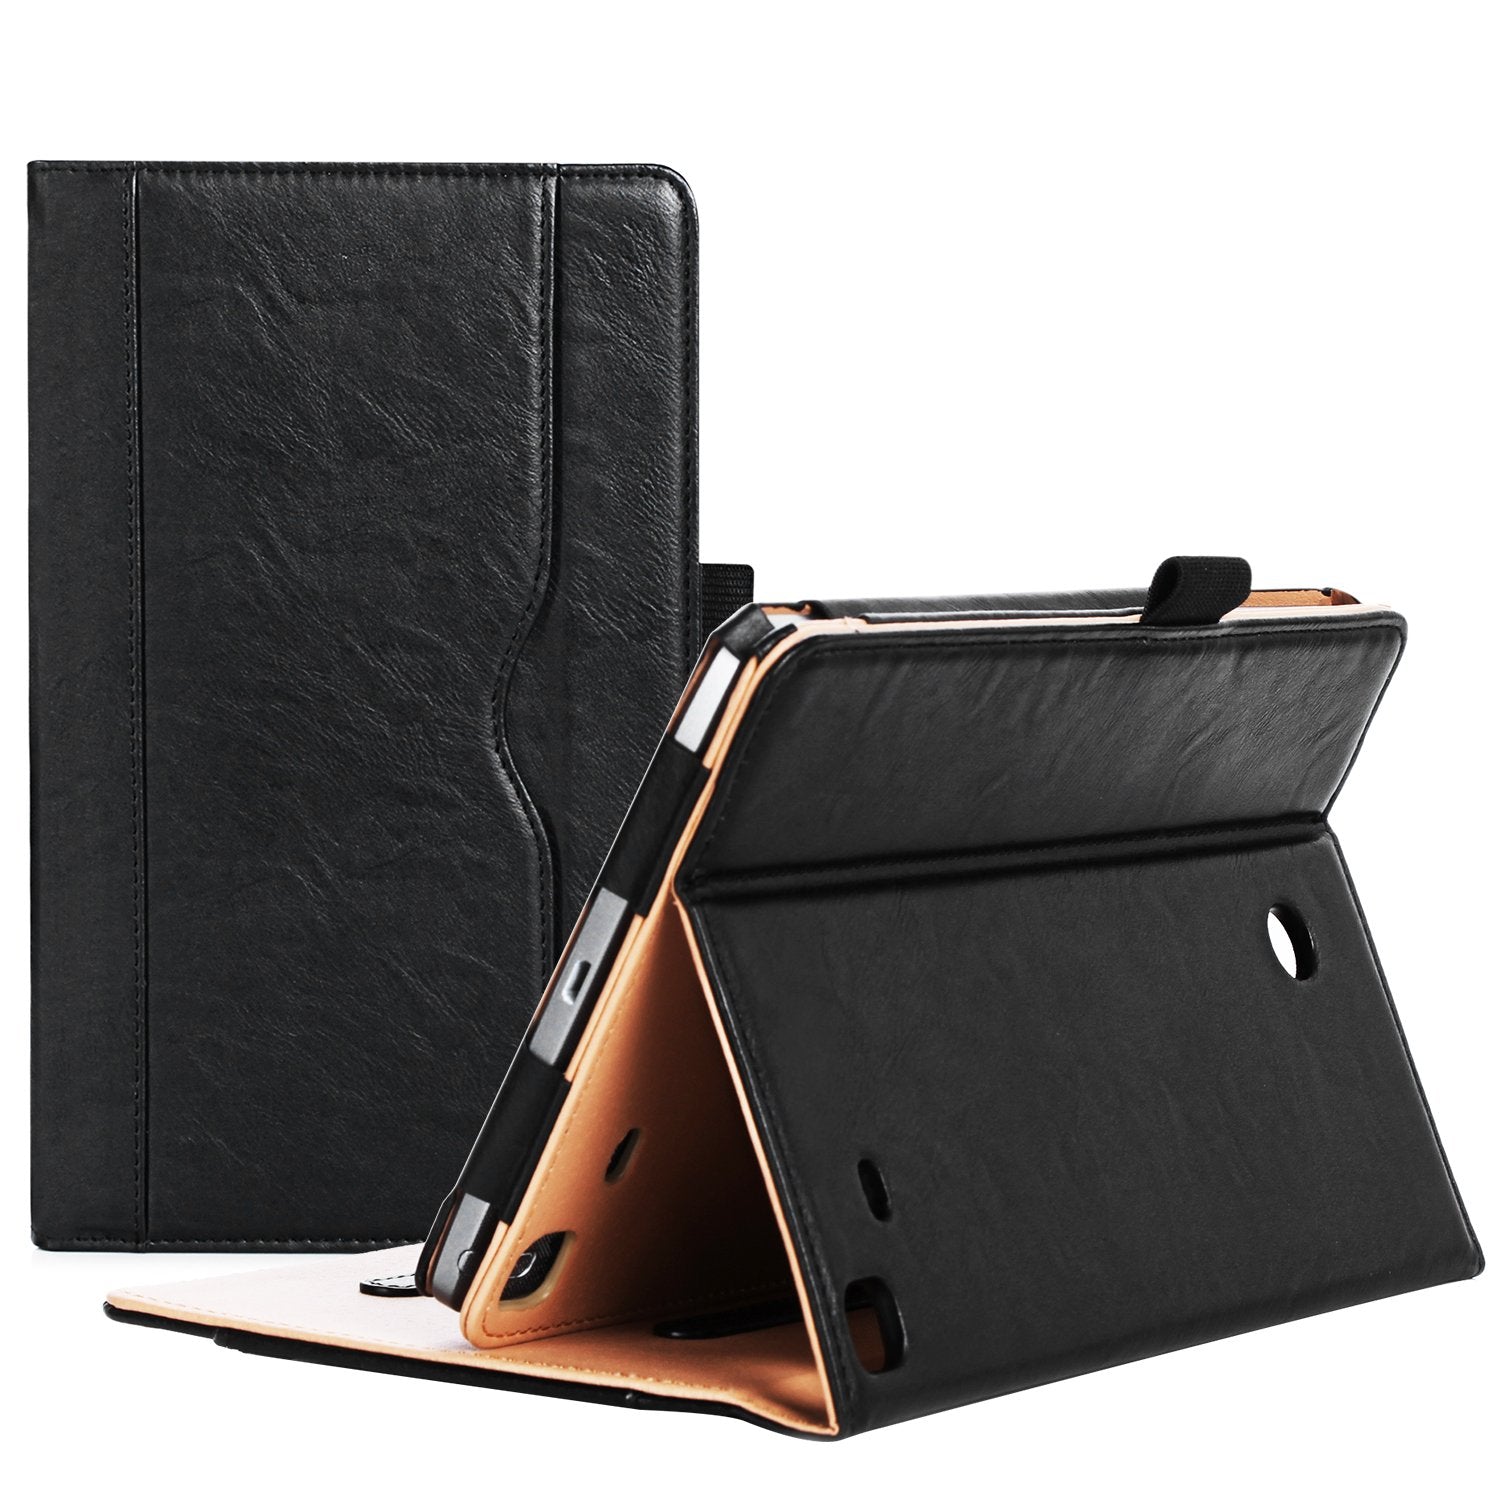 LG G Pad F 8.0 V495 Leather Folio Case